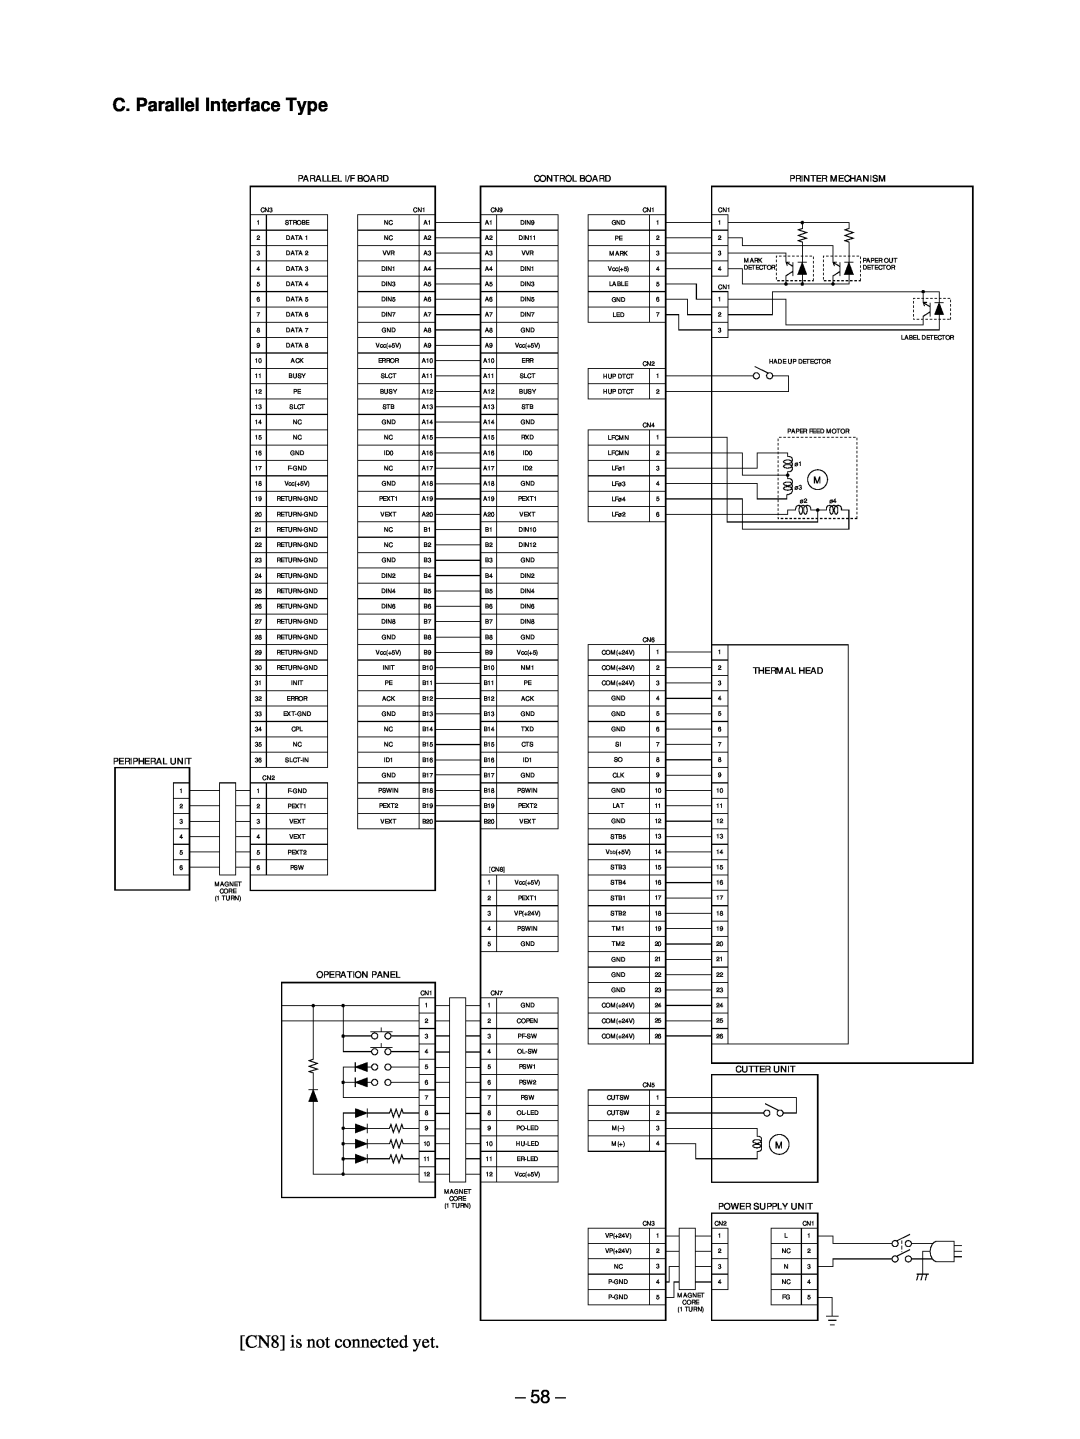 Star Micronics TSP400 Parallel I/F Board, Control Board, Peripheral Unit, Operation Panel, Thermal Head, Printer Mechanism 